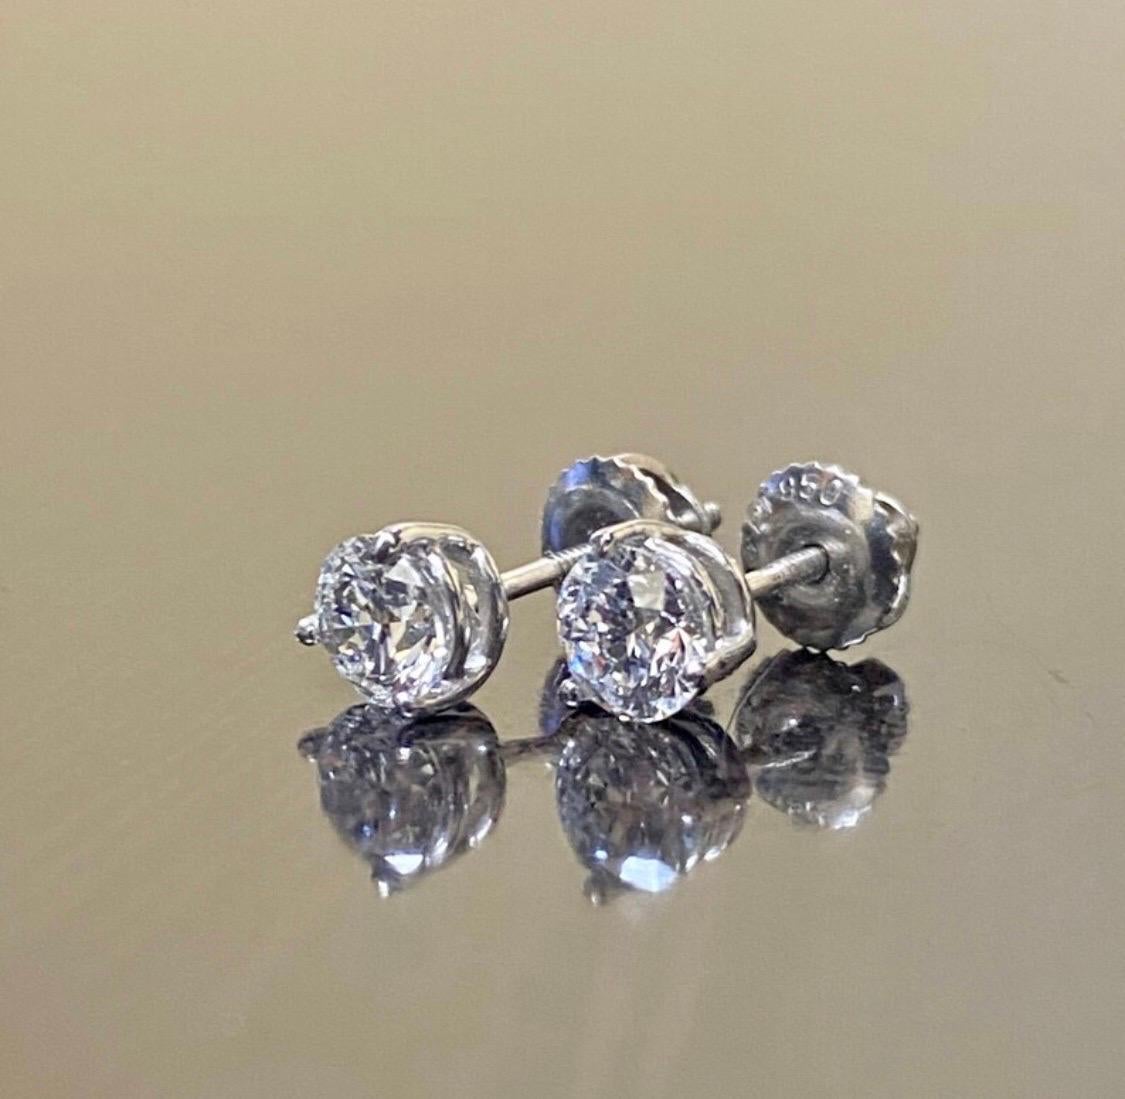 DeKara Designs Classic

Metal- 95% Platinum 5% Iridium.

Stones- 2 GIA Certified Round Diamonds, 1 F Color VVS1 Clarity 0.43 Carats, 1 F Color VS1 Clarity 0.41 Carats. Both Diamonds are Laser Inscribed.

Earrings Come With GIA Diamond Dossiers
F